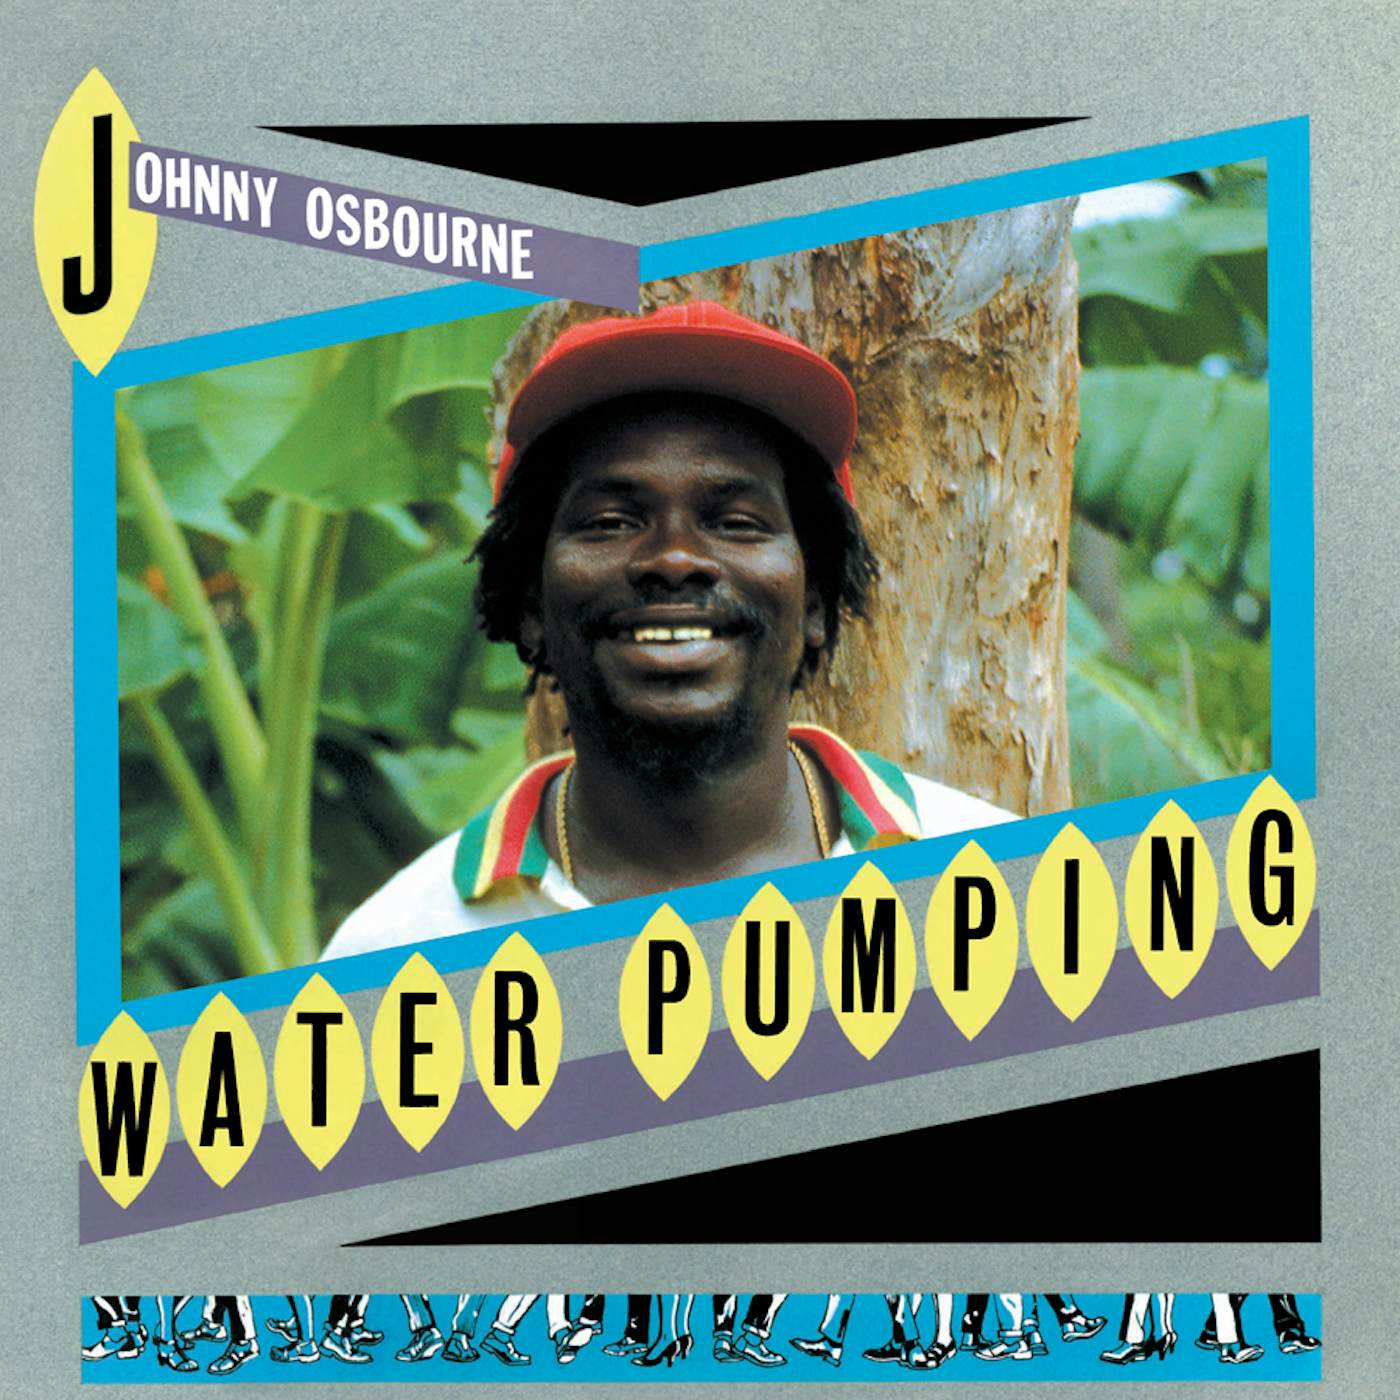 Johnny Osbourne Water Pumping Vinyl Record